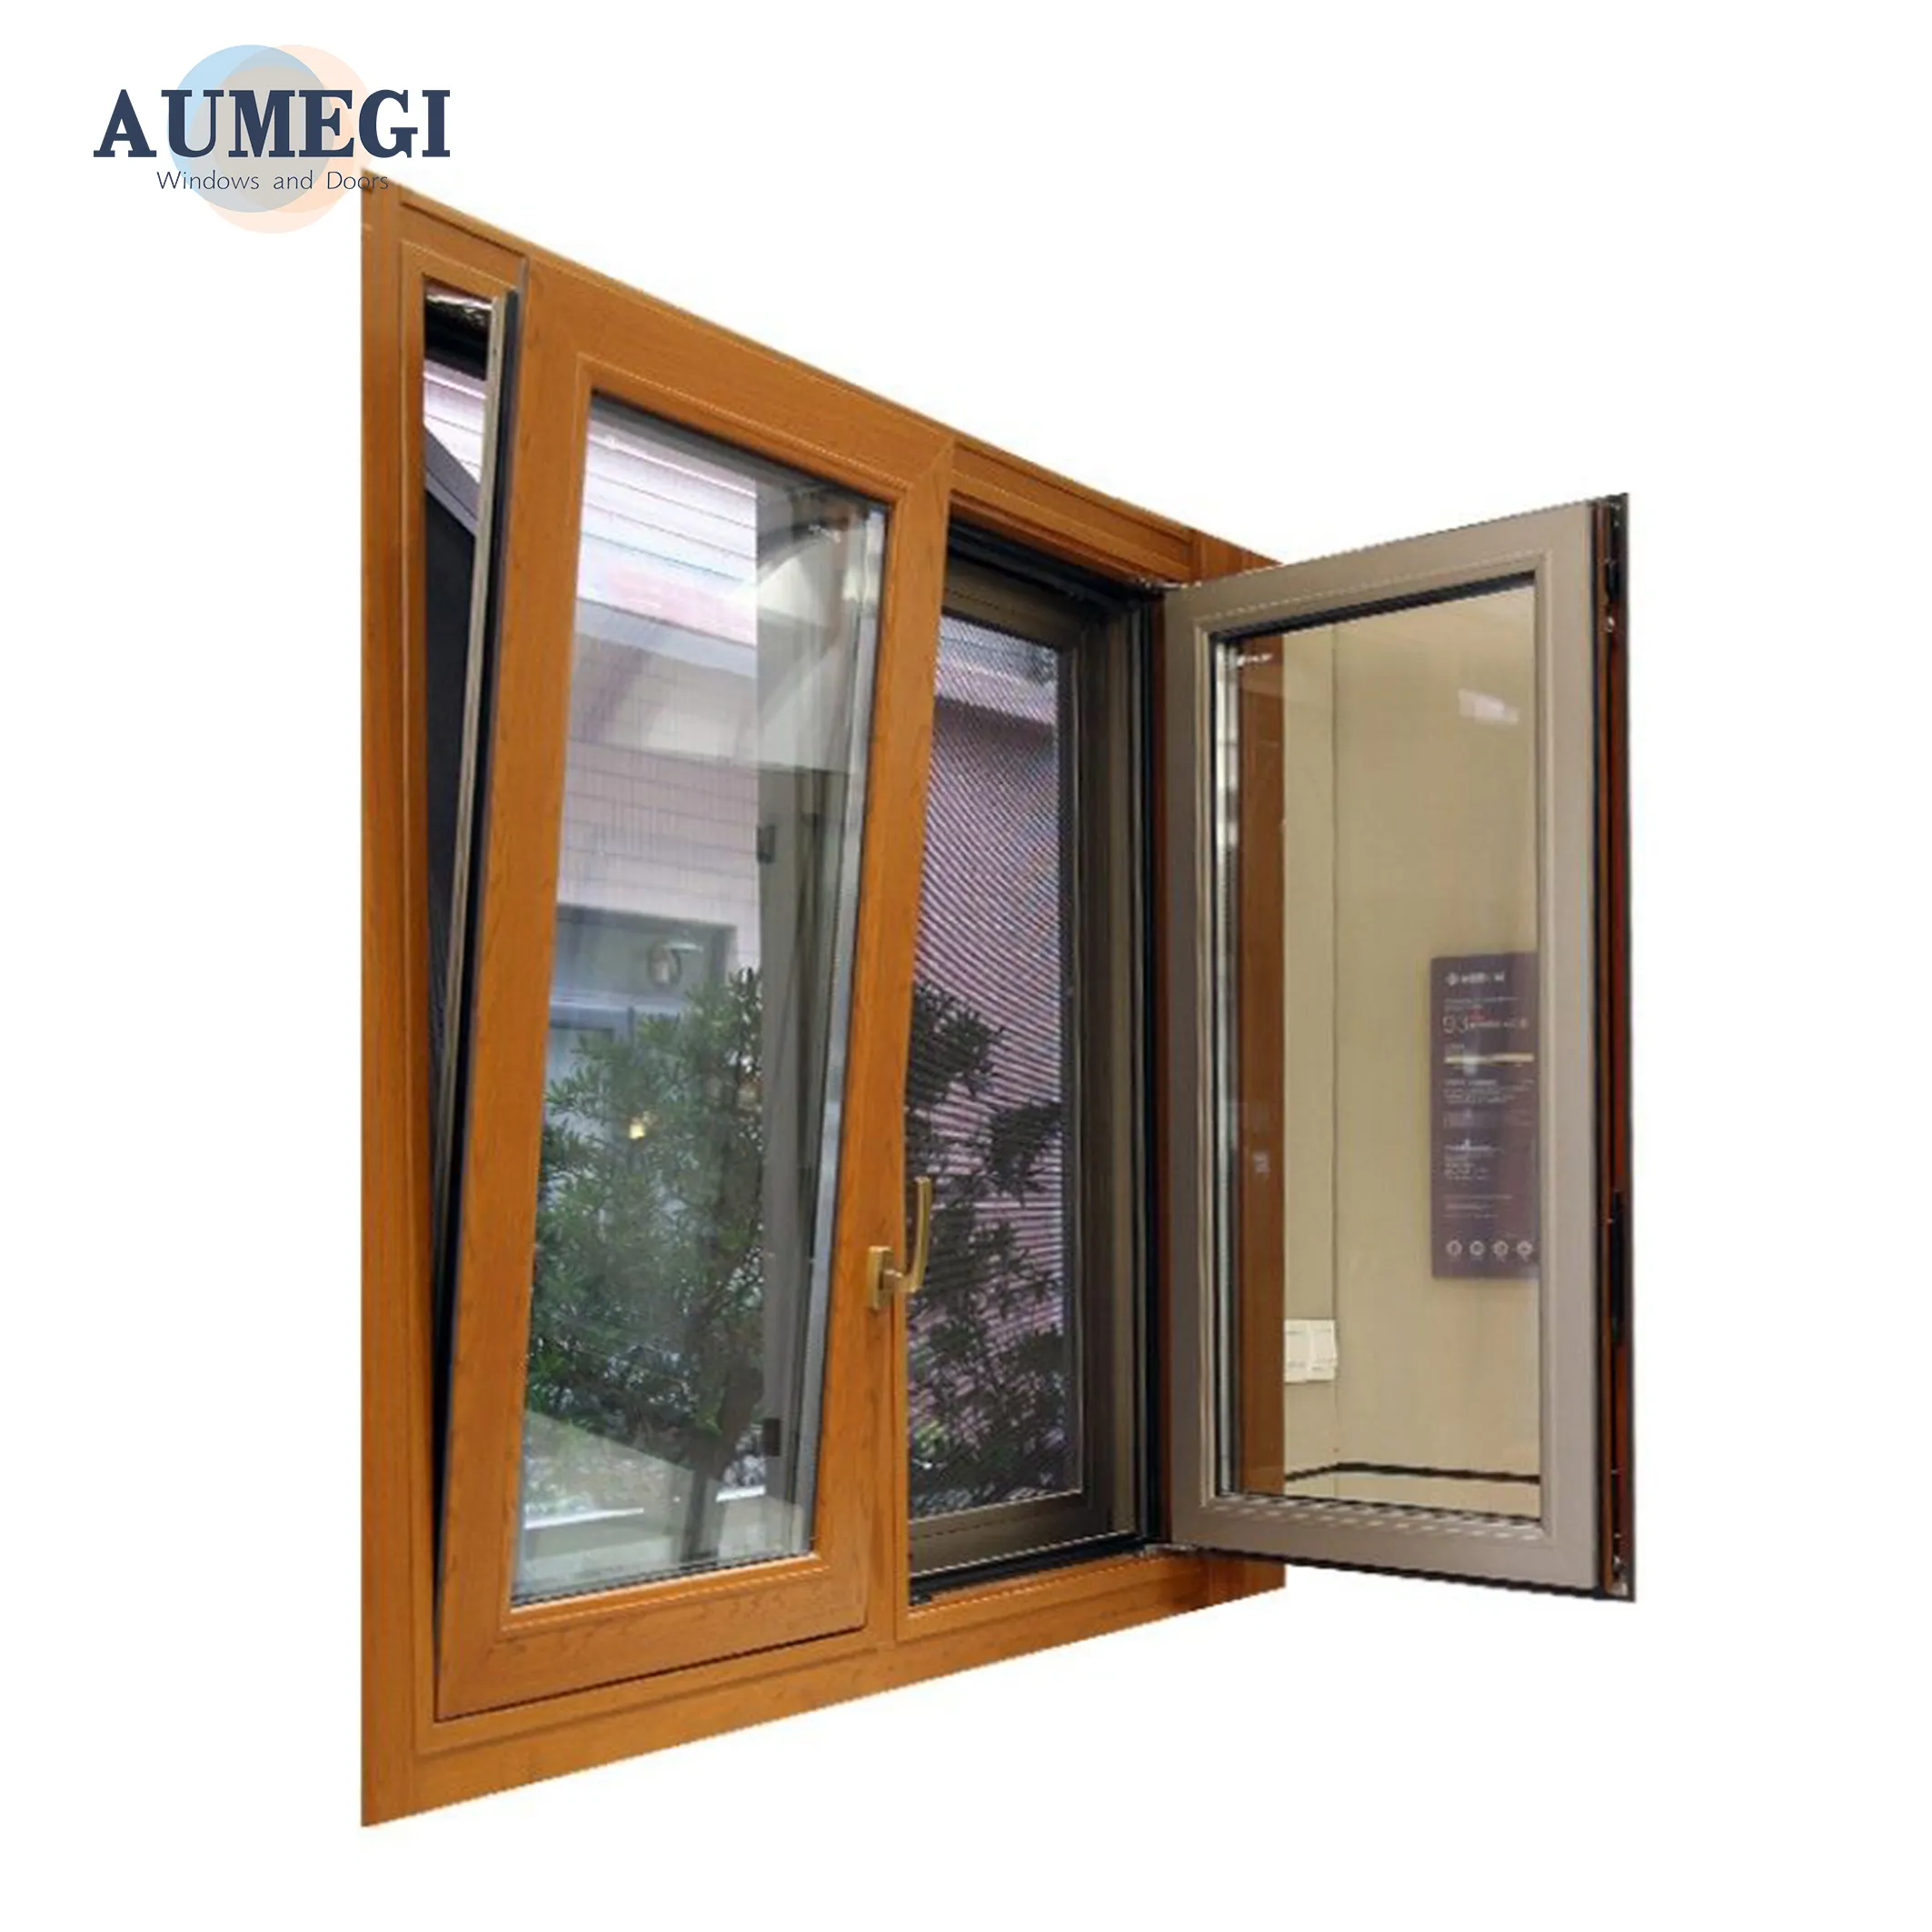 Ventana abatible de aluminio para uso doméstico Aumegi para ventanas abatibles francesas para el hogar